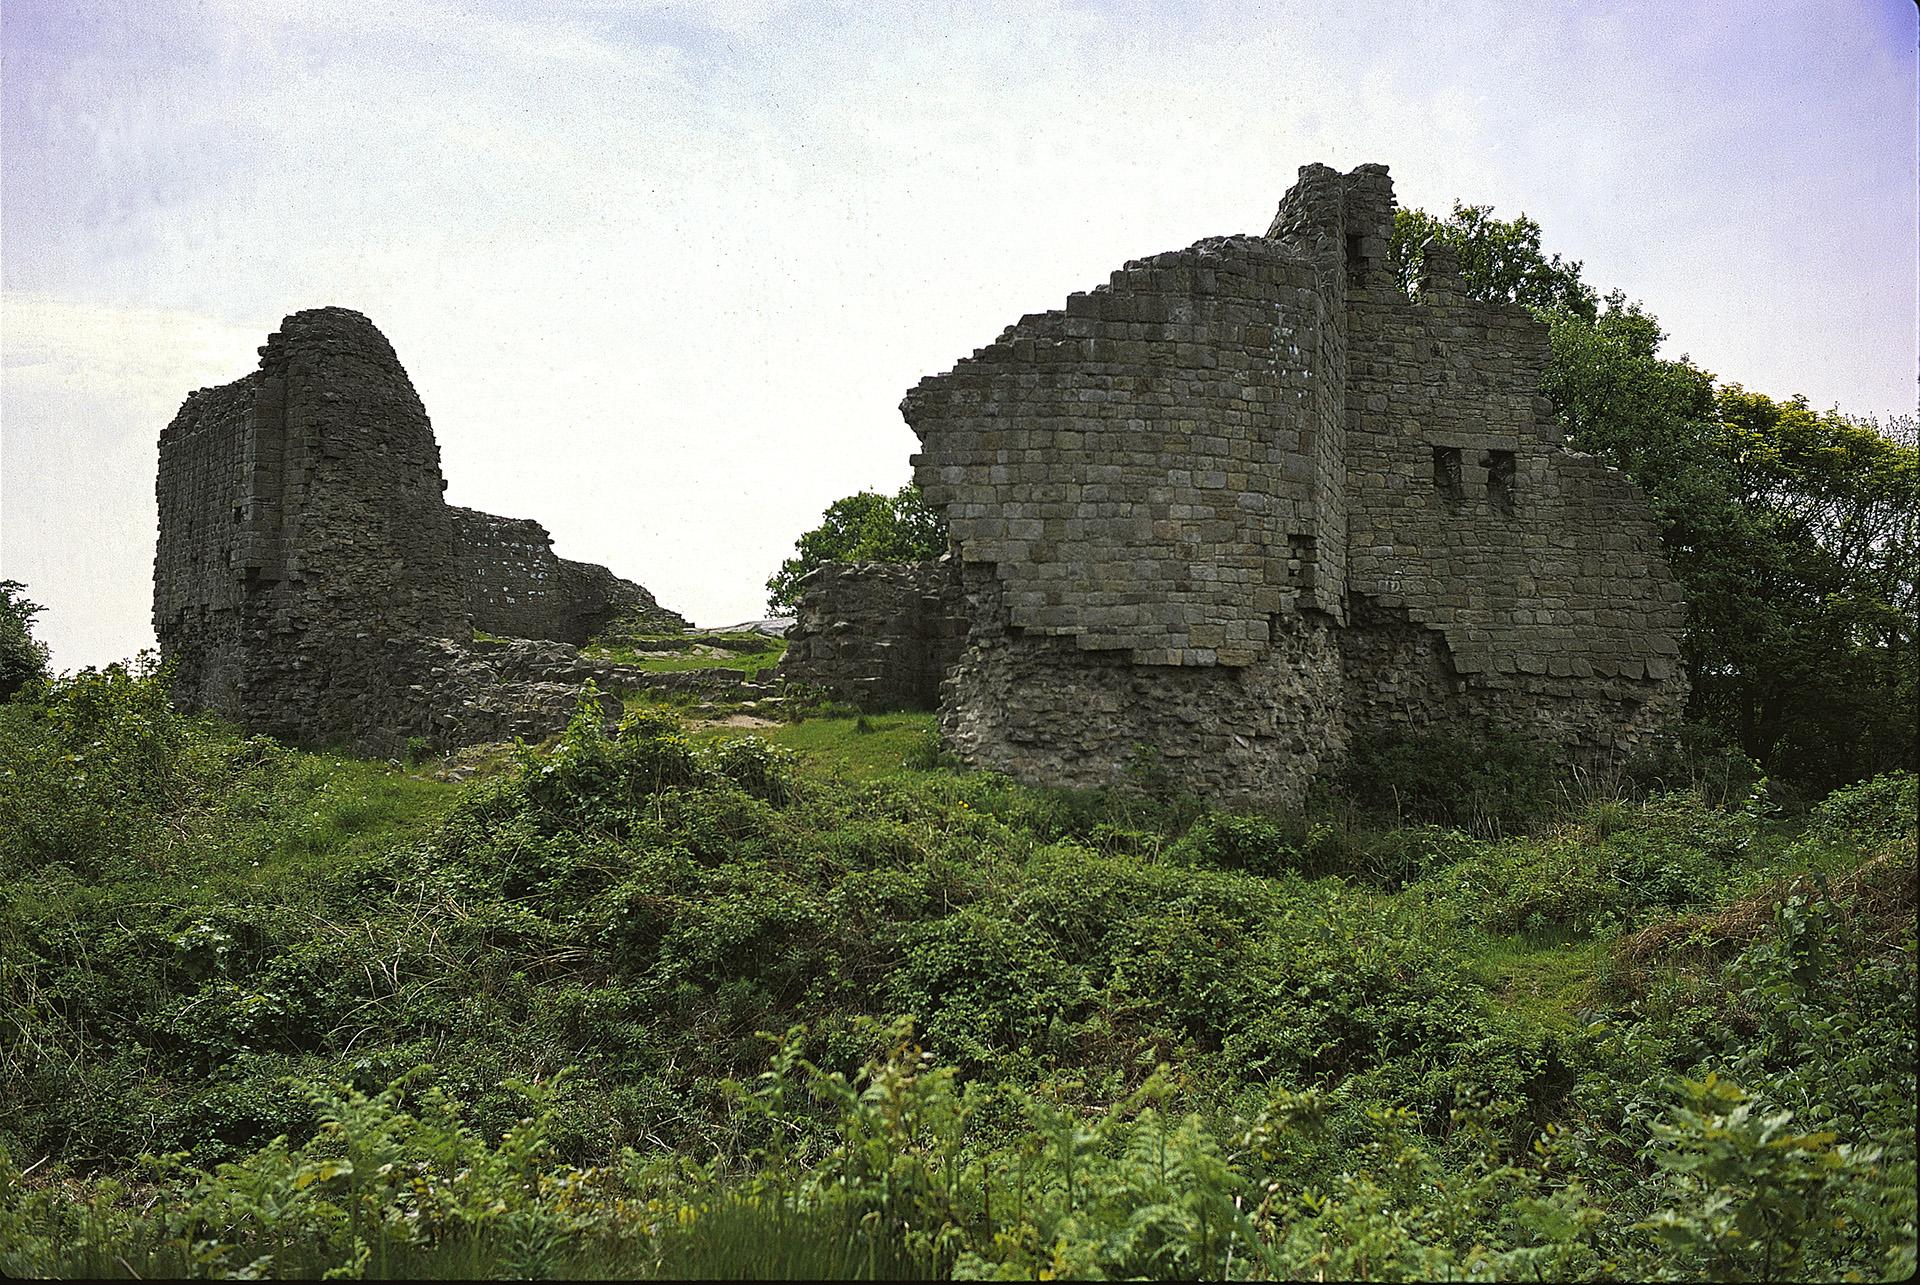 Castell Caergwrle/Caergwrle Castle